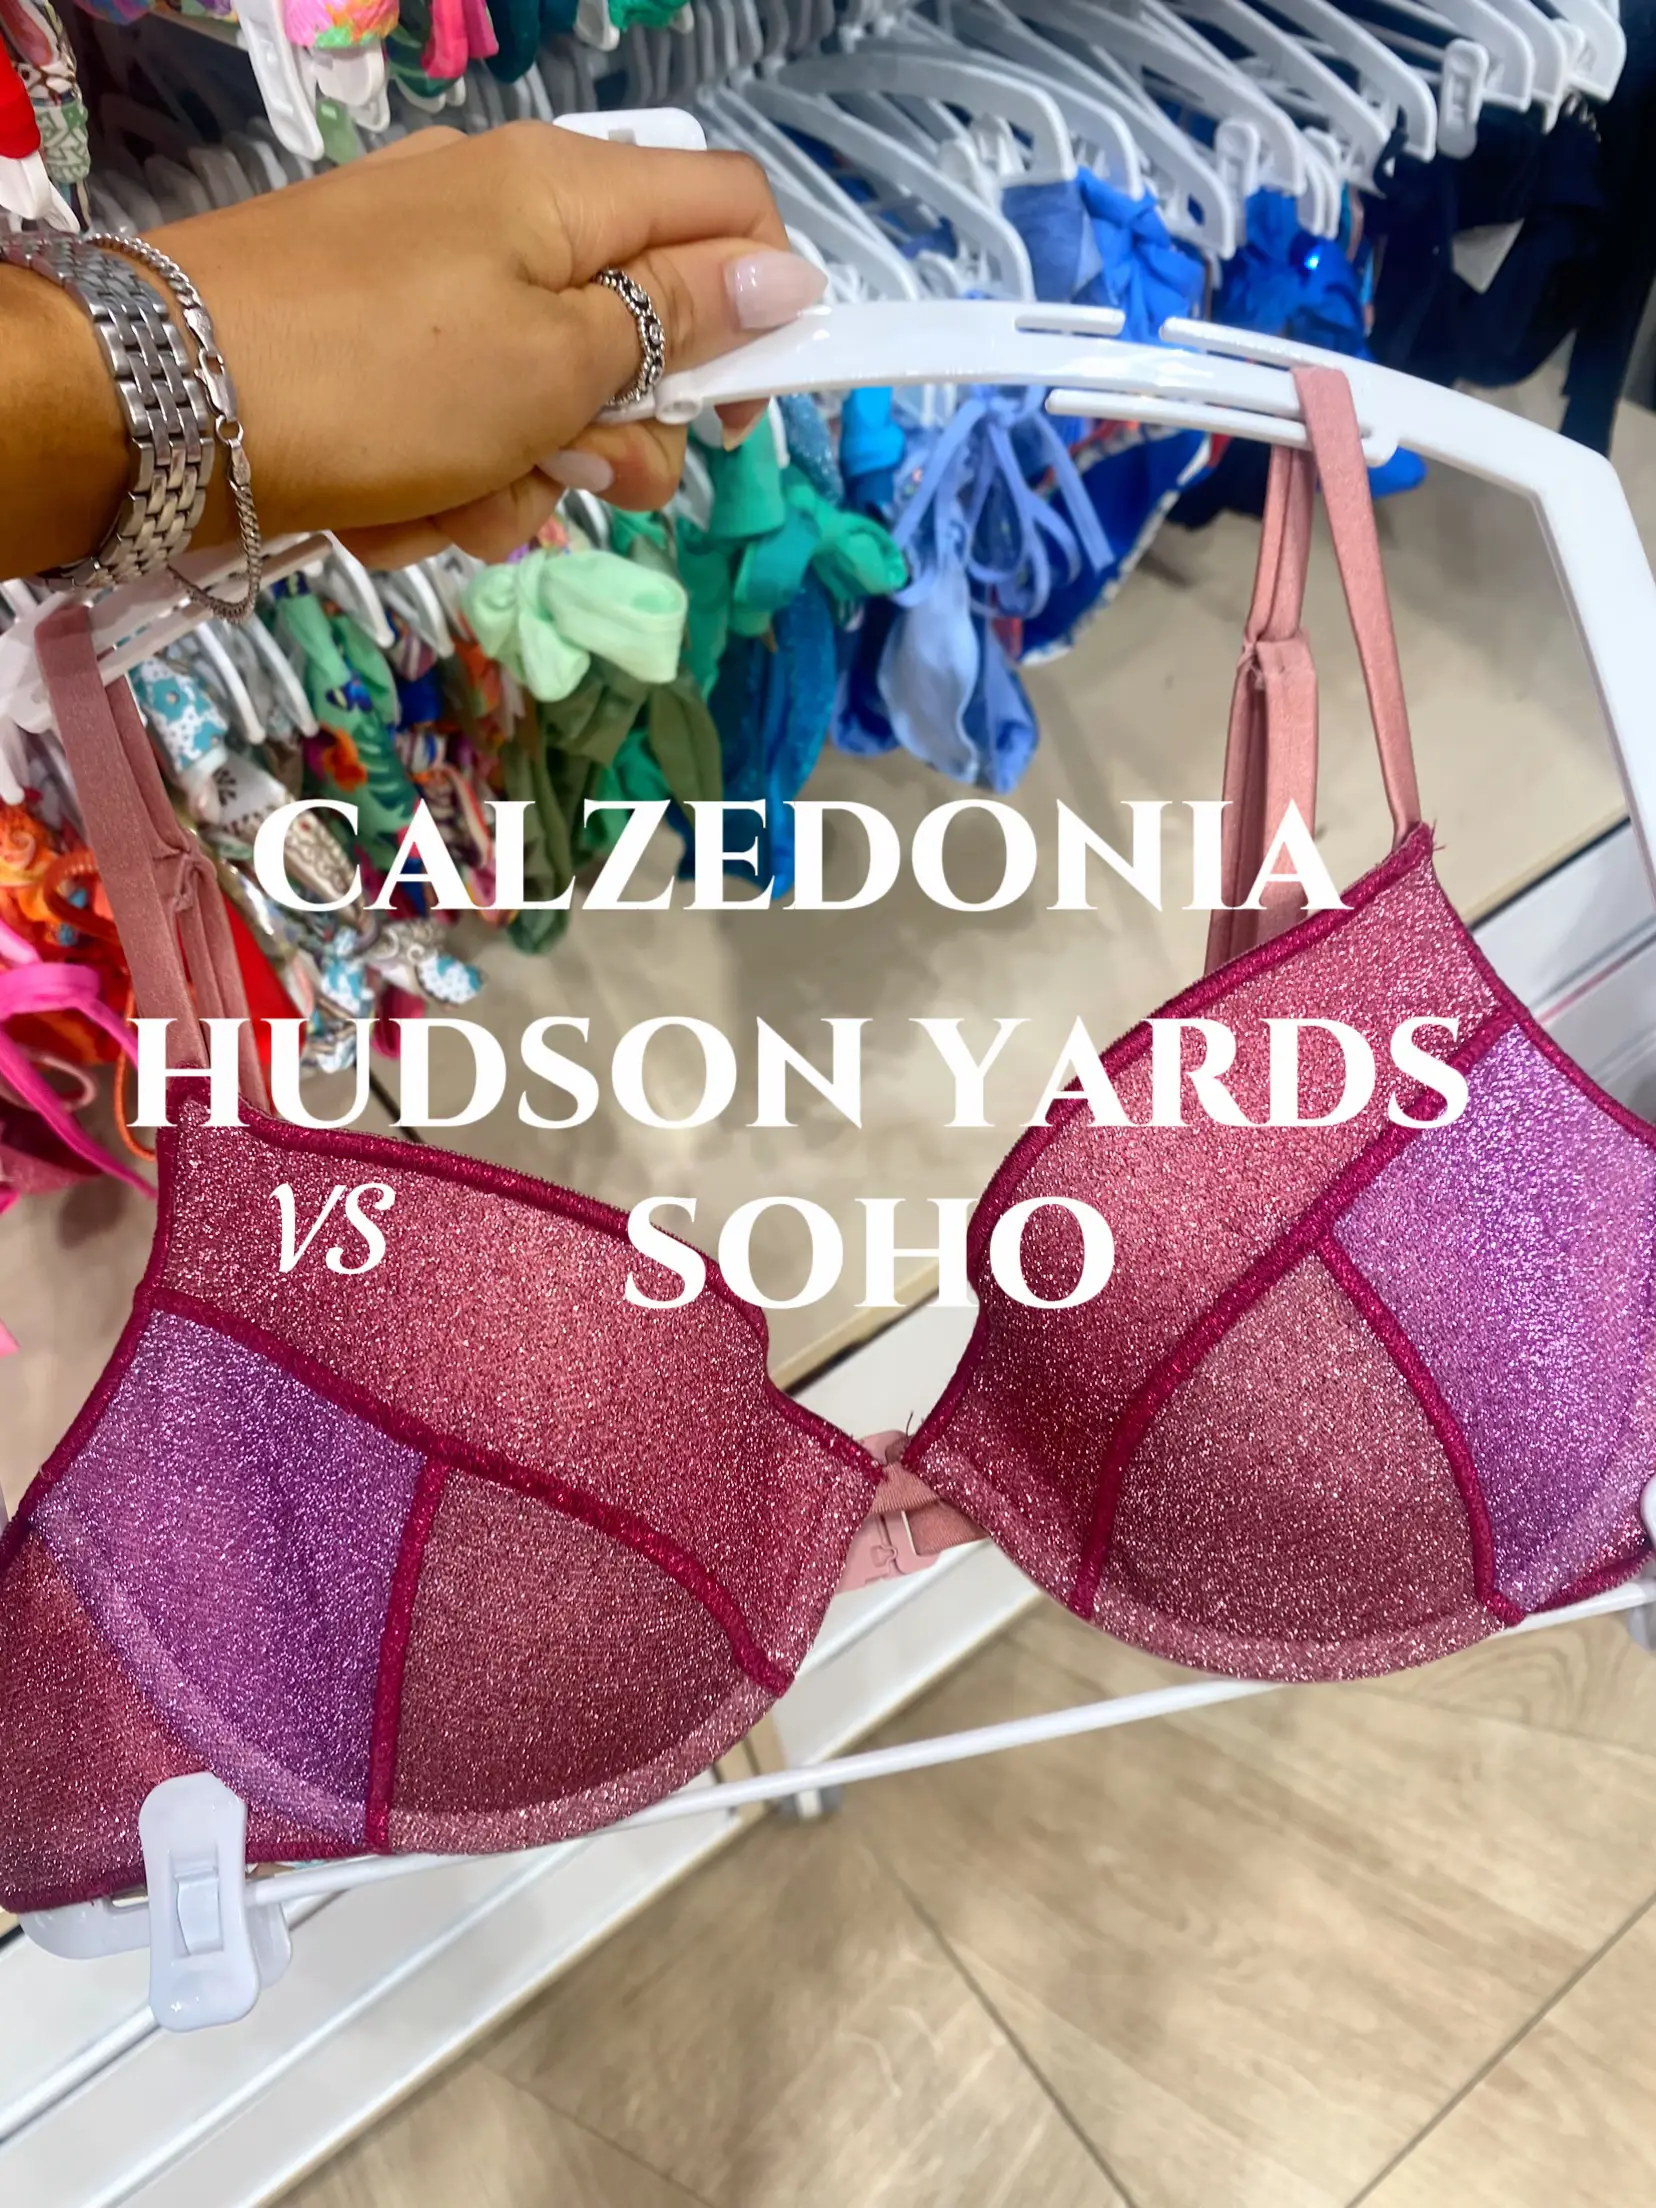 Calzedonia Hudson Yards vs Soho  Gallery posted by Lexirosenstein